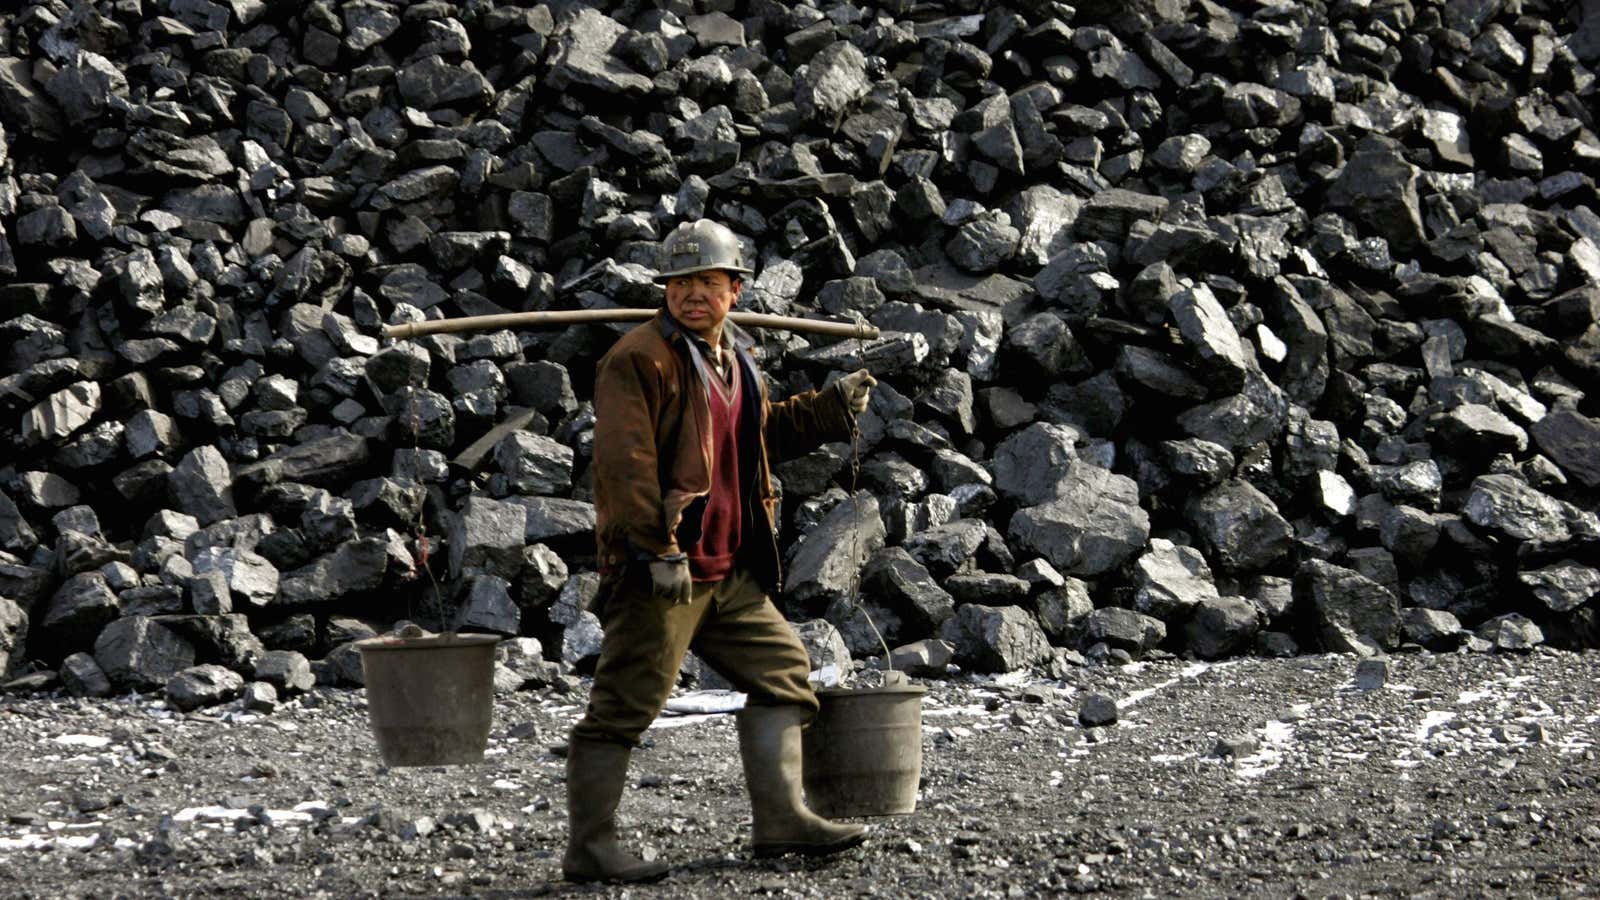 Is China’s coal binge through?